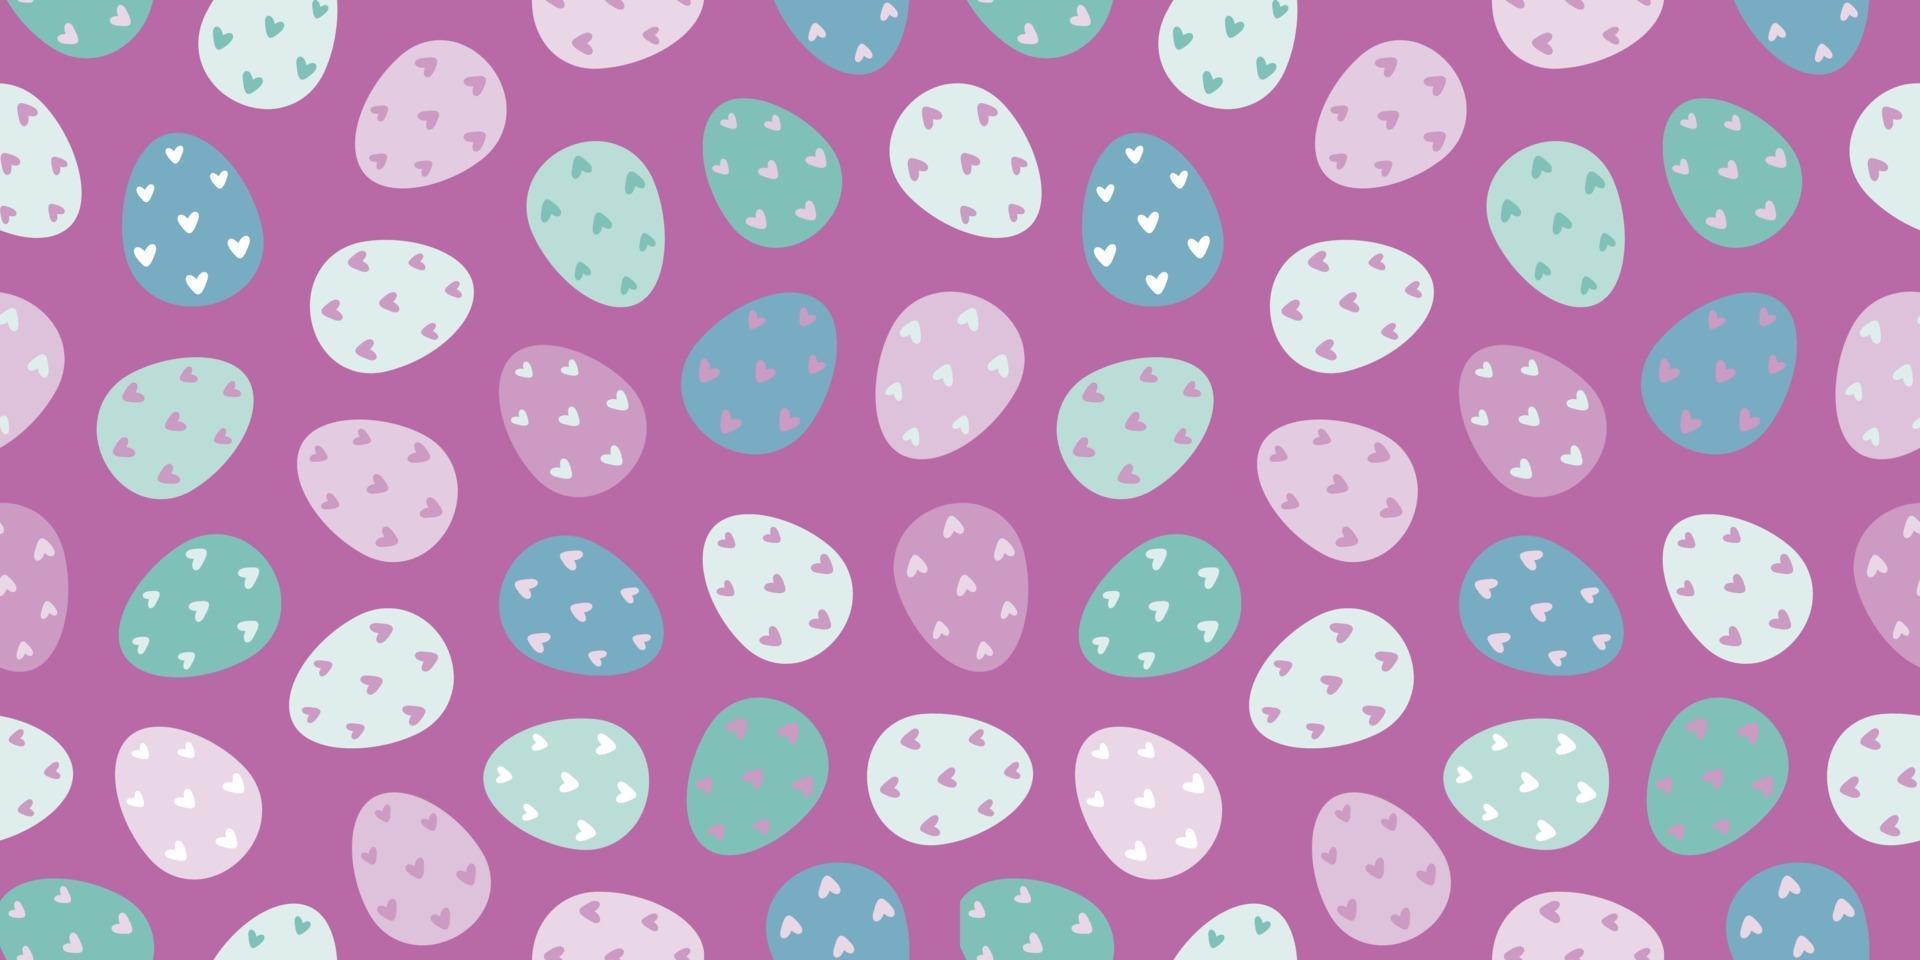 huevos de pascua de patrones sin fisuras. huevos de pascua decorados sobre un fondo blanco. diseño para textiles, empaques, envoltorios, tarjetas de felicitación, papel, imprenta. ilustración vectorial vector